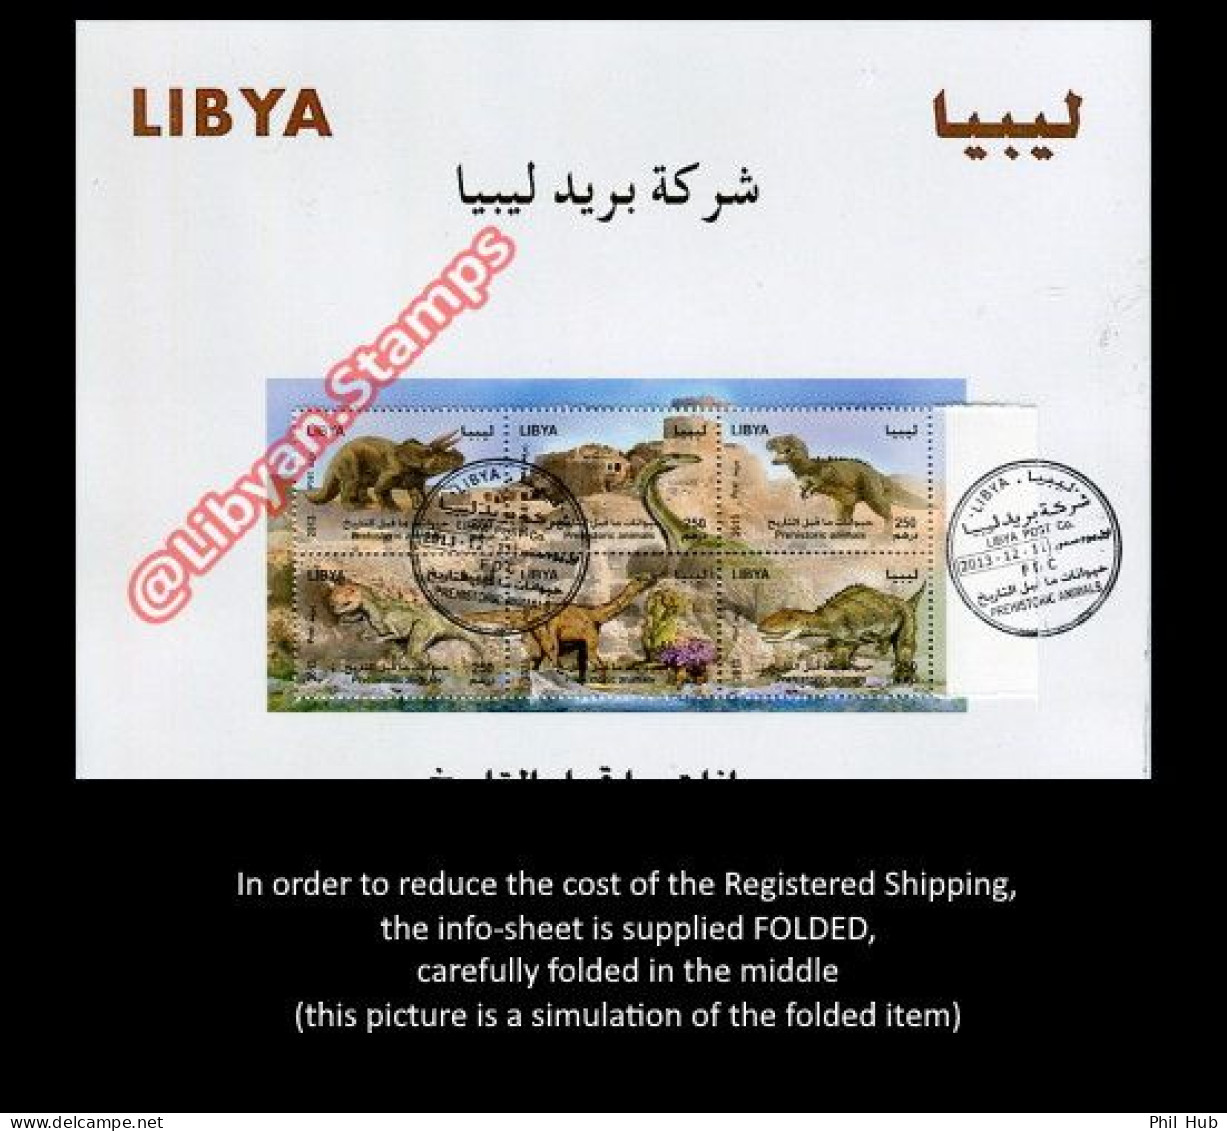 LIBYA 2013 Dinosaurs (Libya Post INFO-SHEET With Stamps PMK) SUPPLIED FOLDED - Préhistoriques